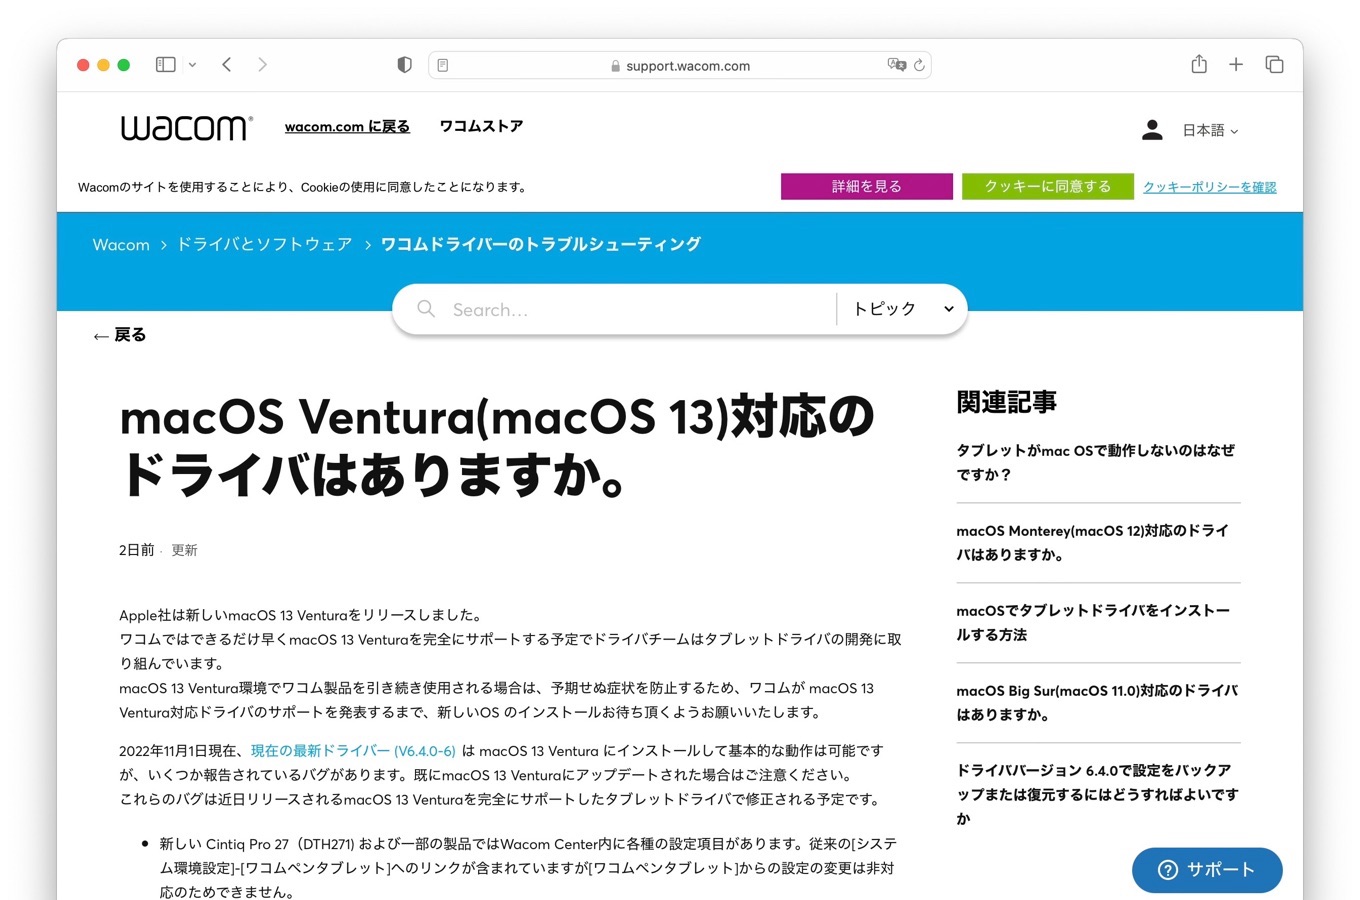 macOS Ventura(macOS 13)対応のドライバはありますか?